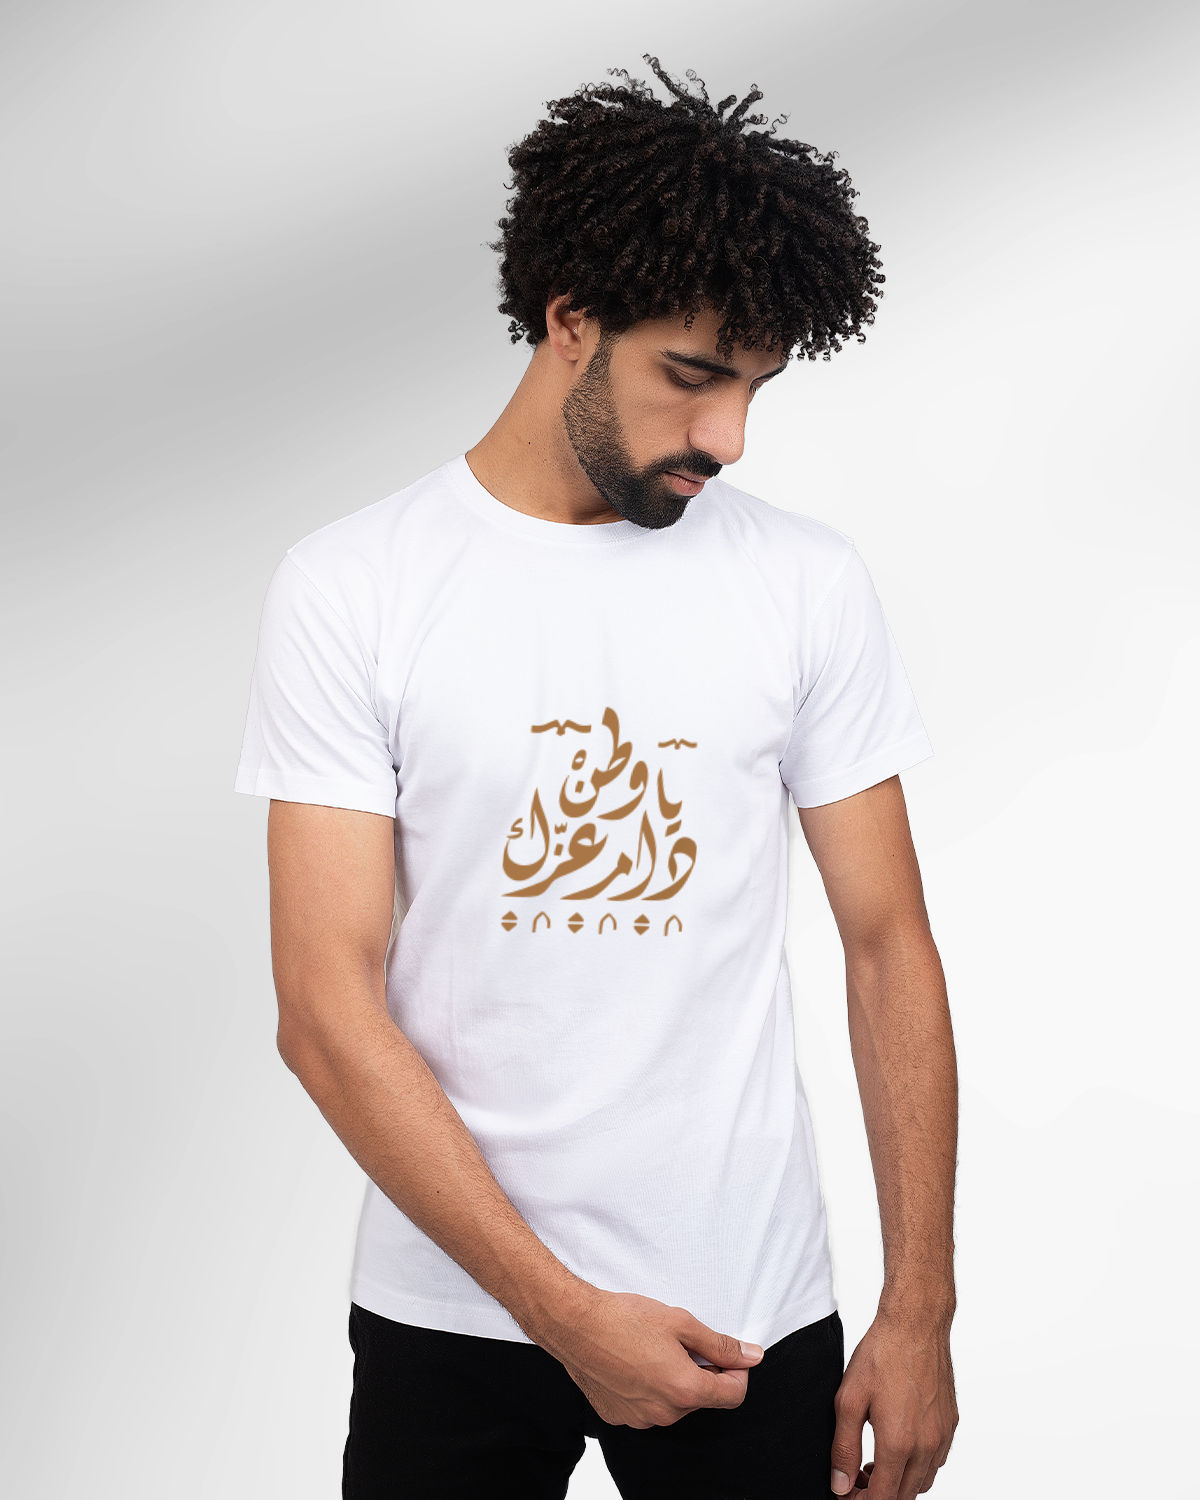 Men's Foundation Day T-shirt (Ya Watan Dam Eizk)